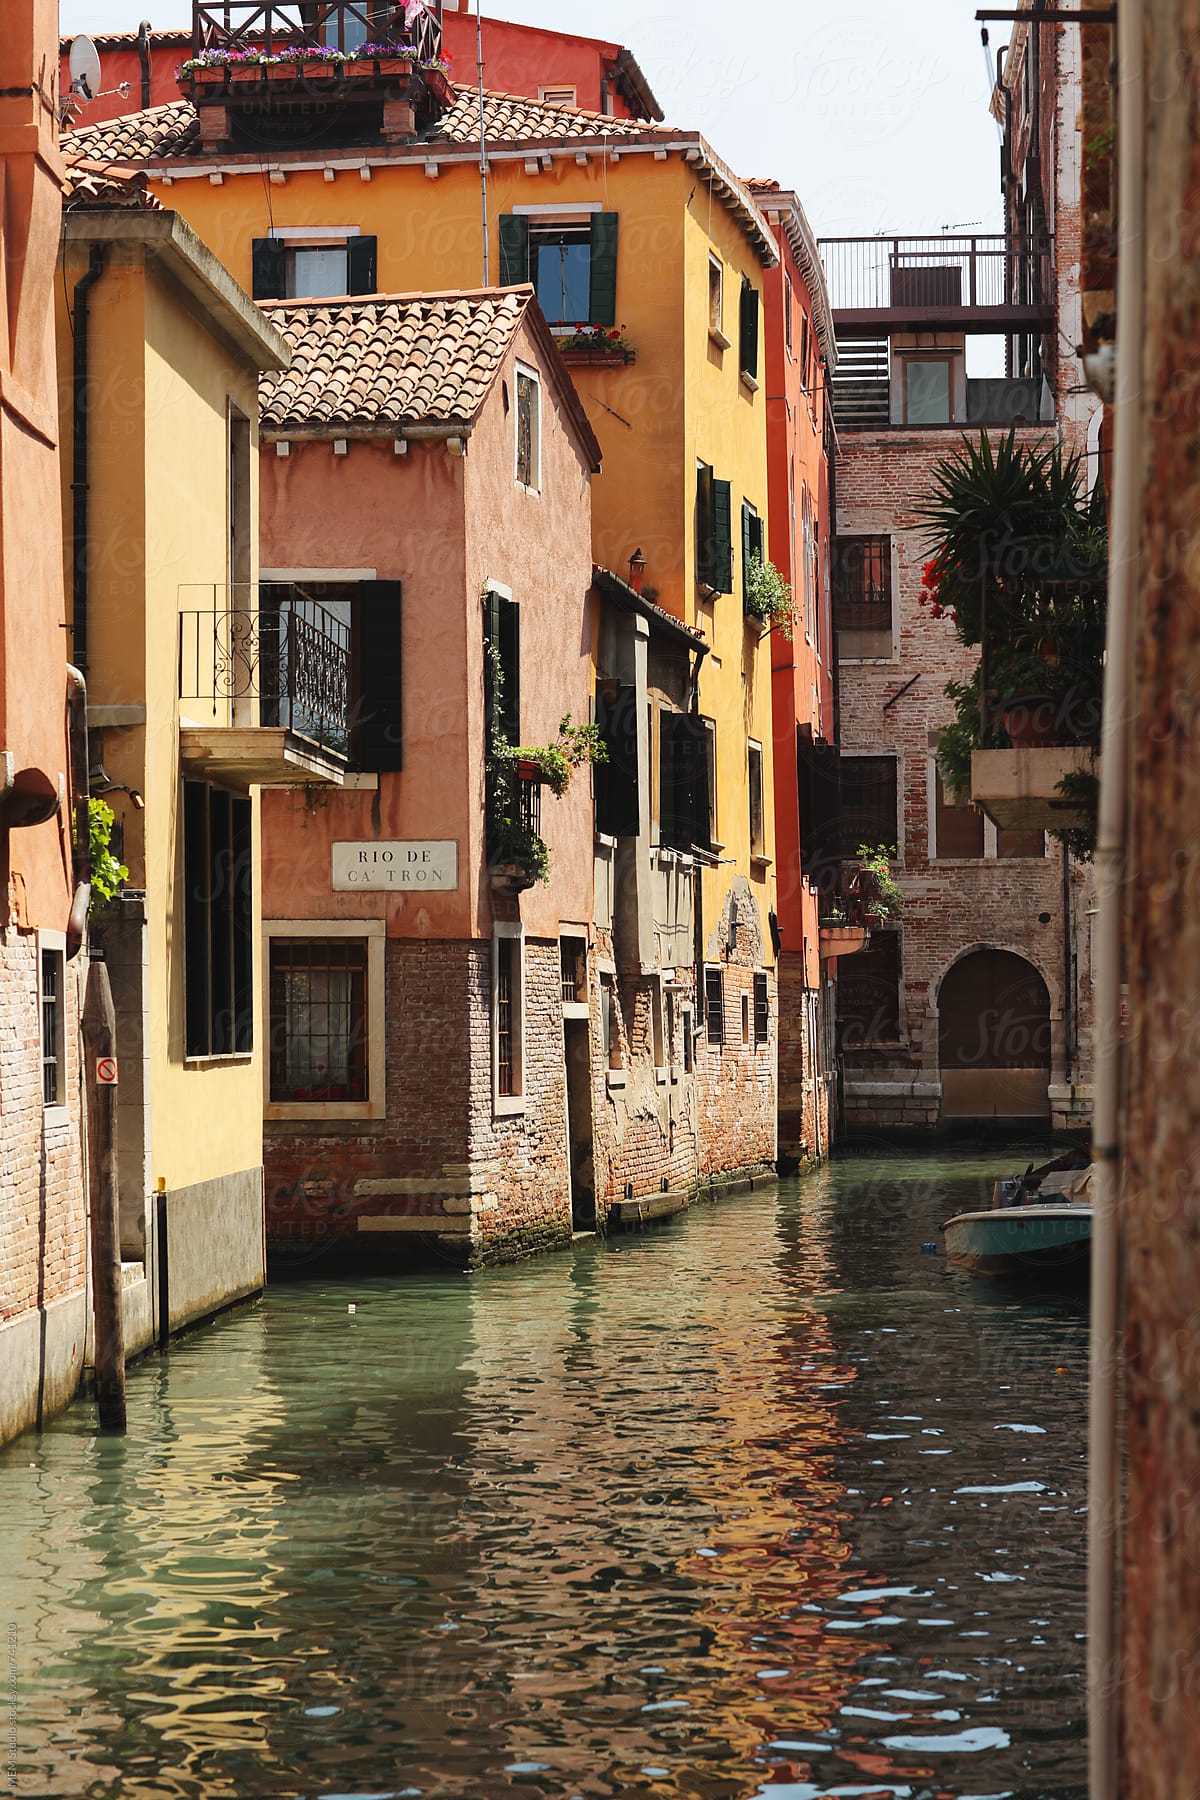 Venice's canal